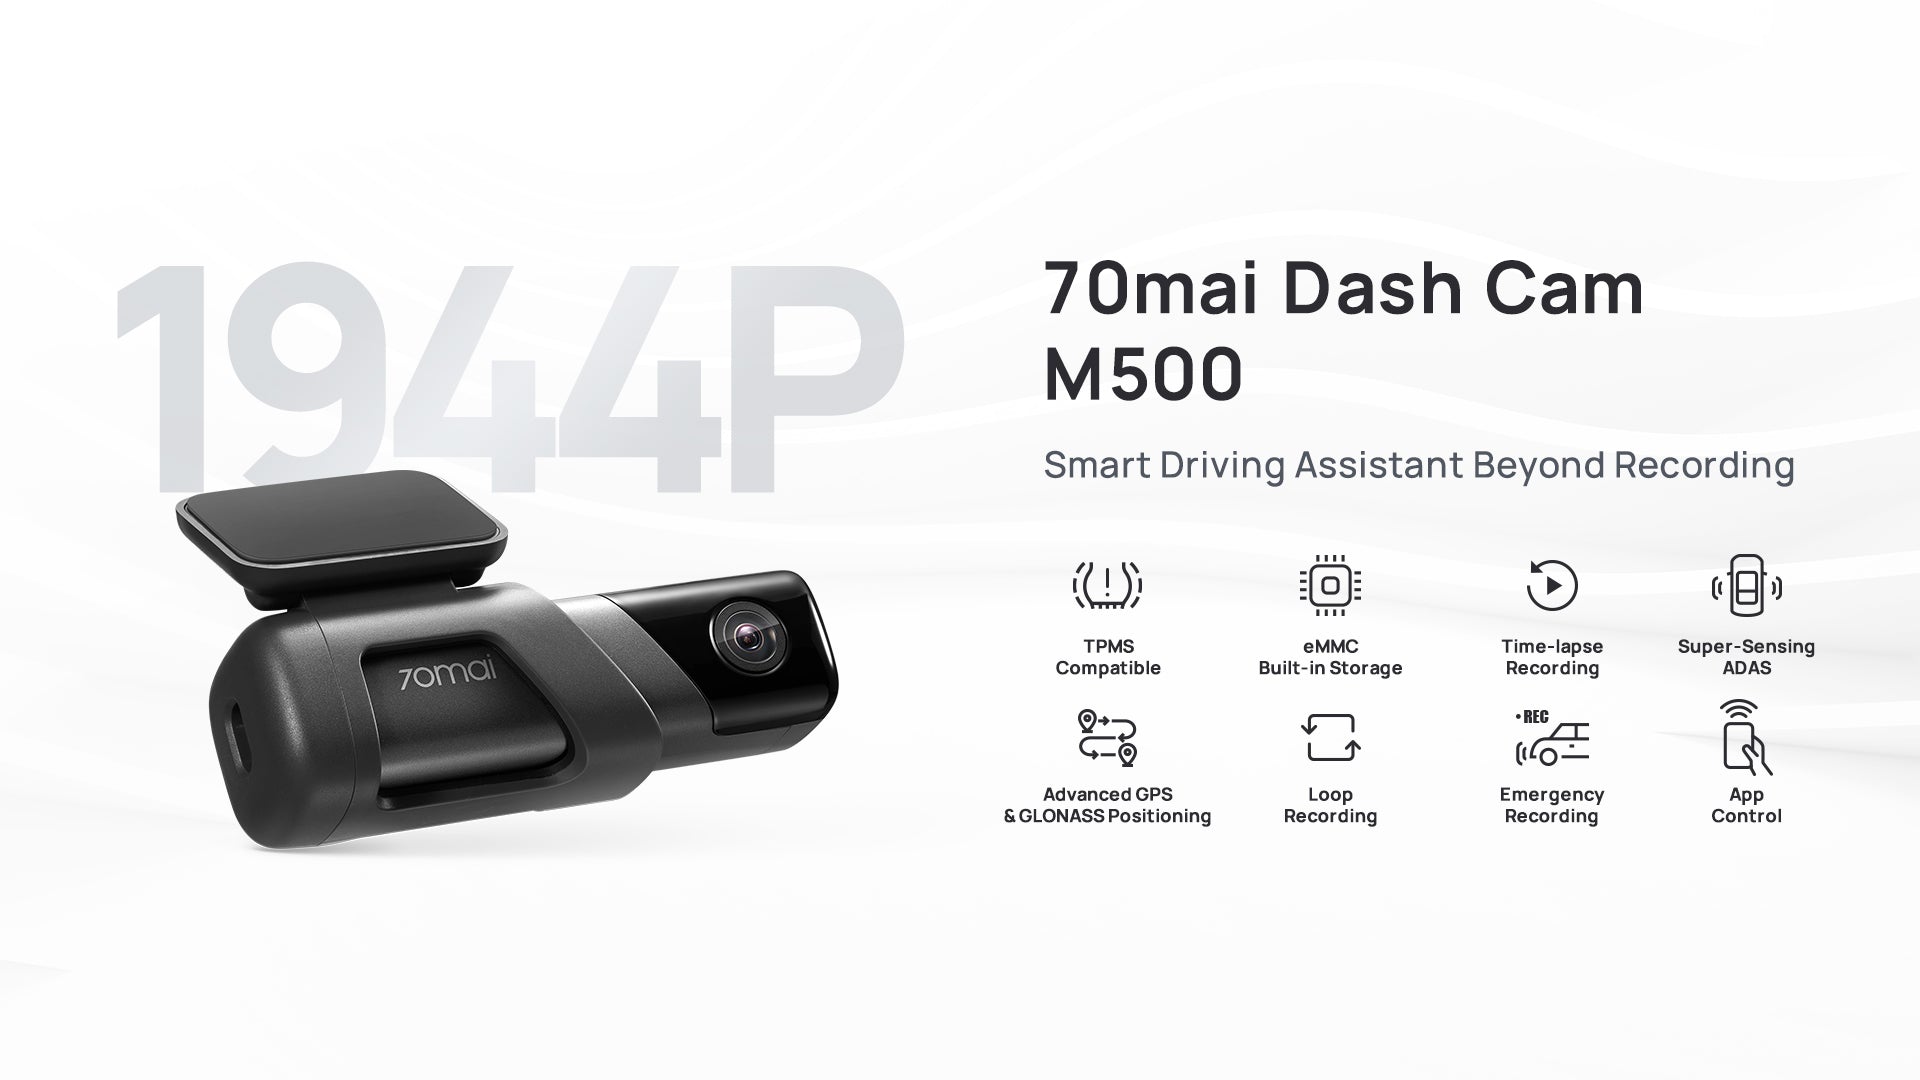 70mai Dash Cam M500 2023 New Car DVR Camera Recorder Built-in GPS ADAS  1944P 170FOV 24H Parking Monitor eMMC built-in Storage